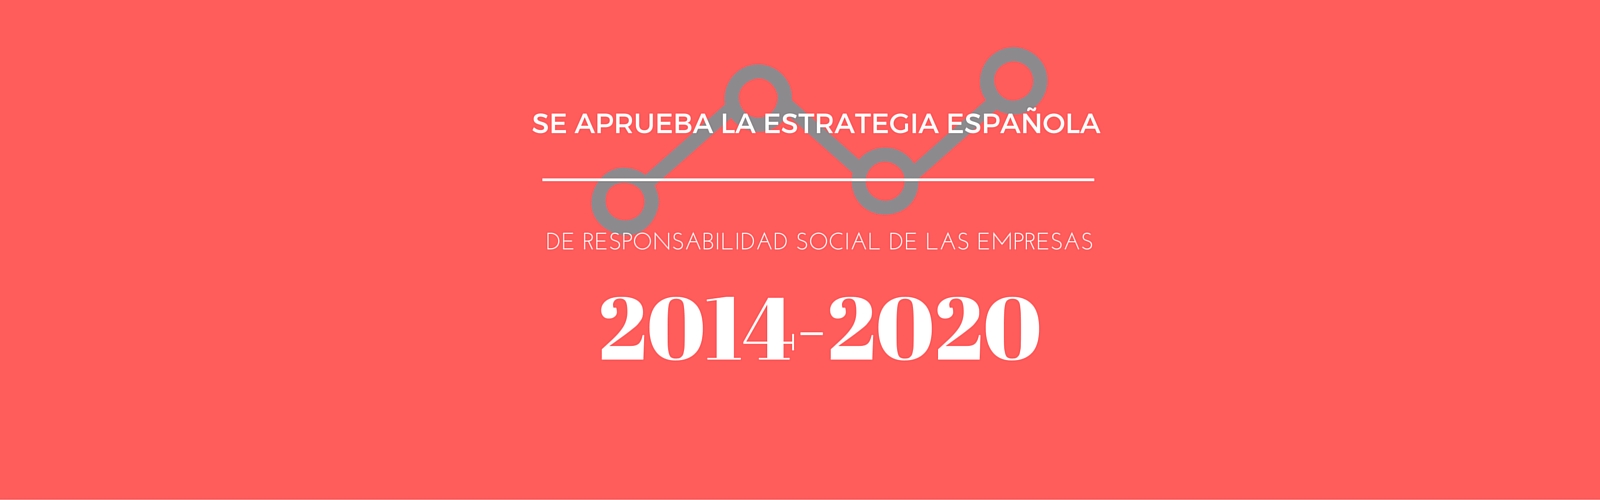 Se aprueba la Estrategia Española de Responsabilidad Social de las Empresas 2014-2020﻿